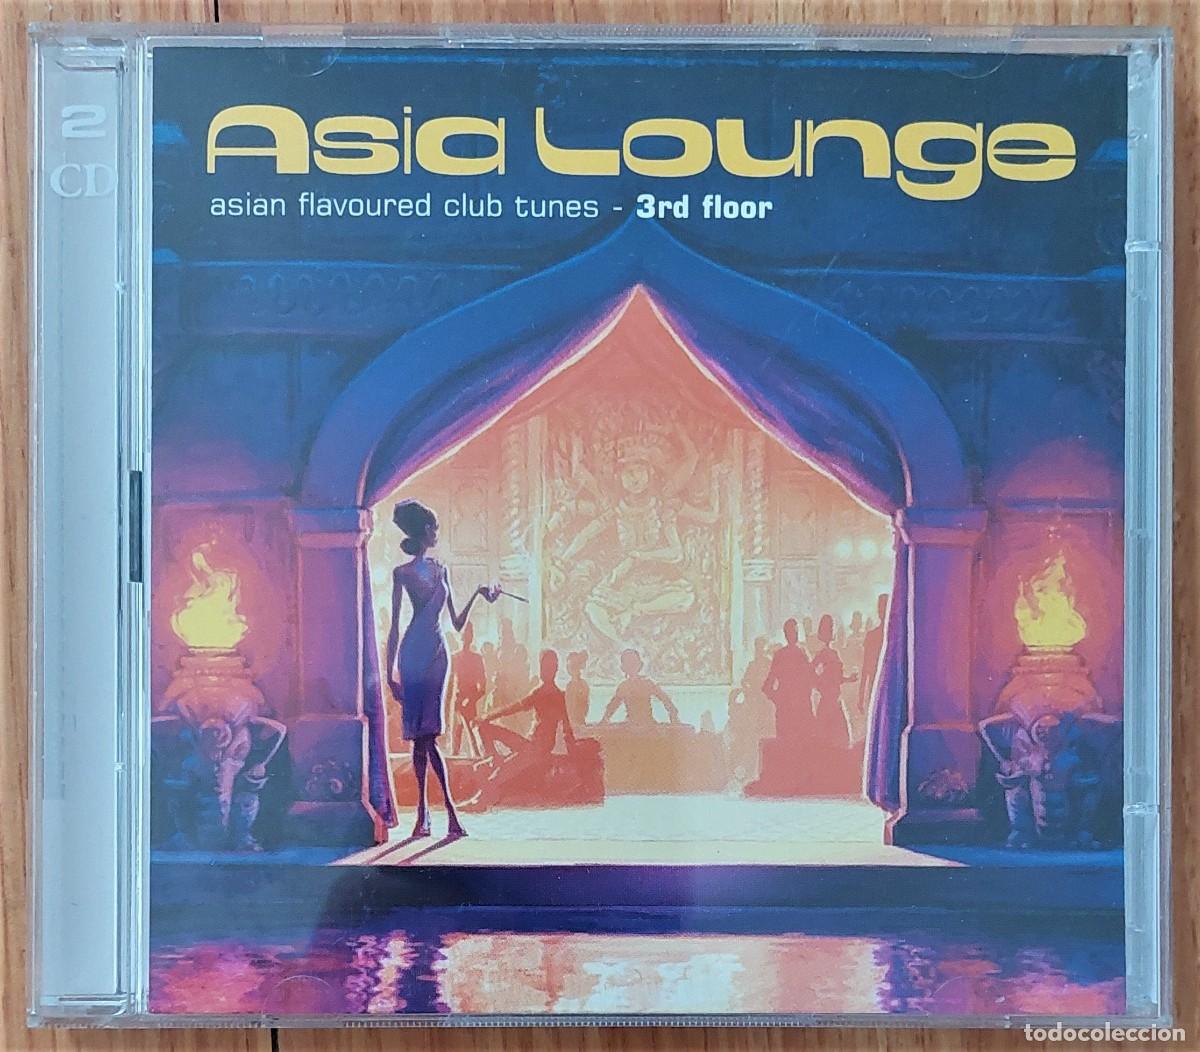 asia lounge: asian flavoured club tunes, 3rd fl - Comprar CD